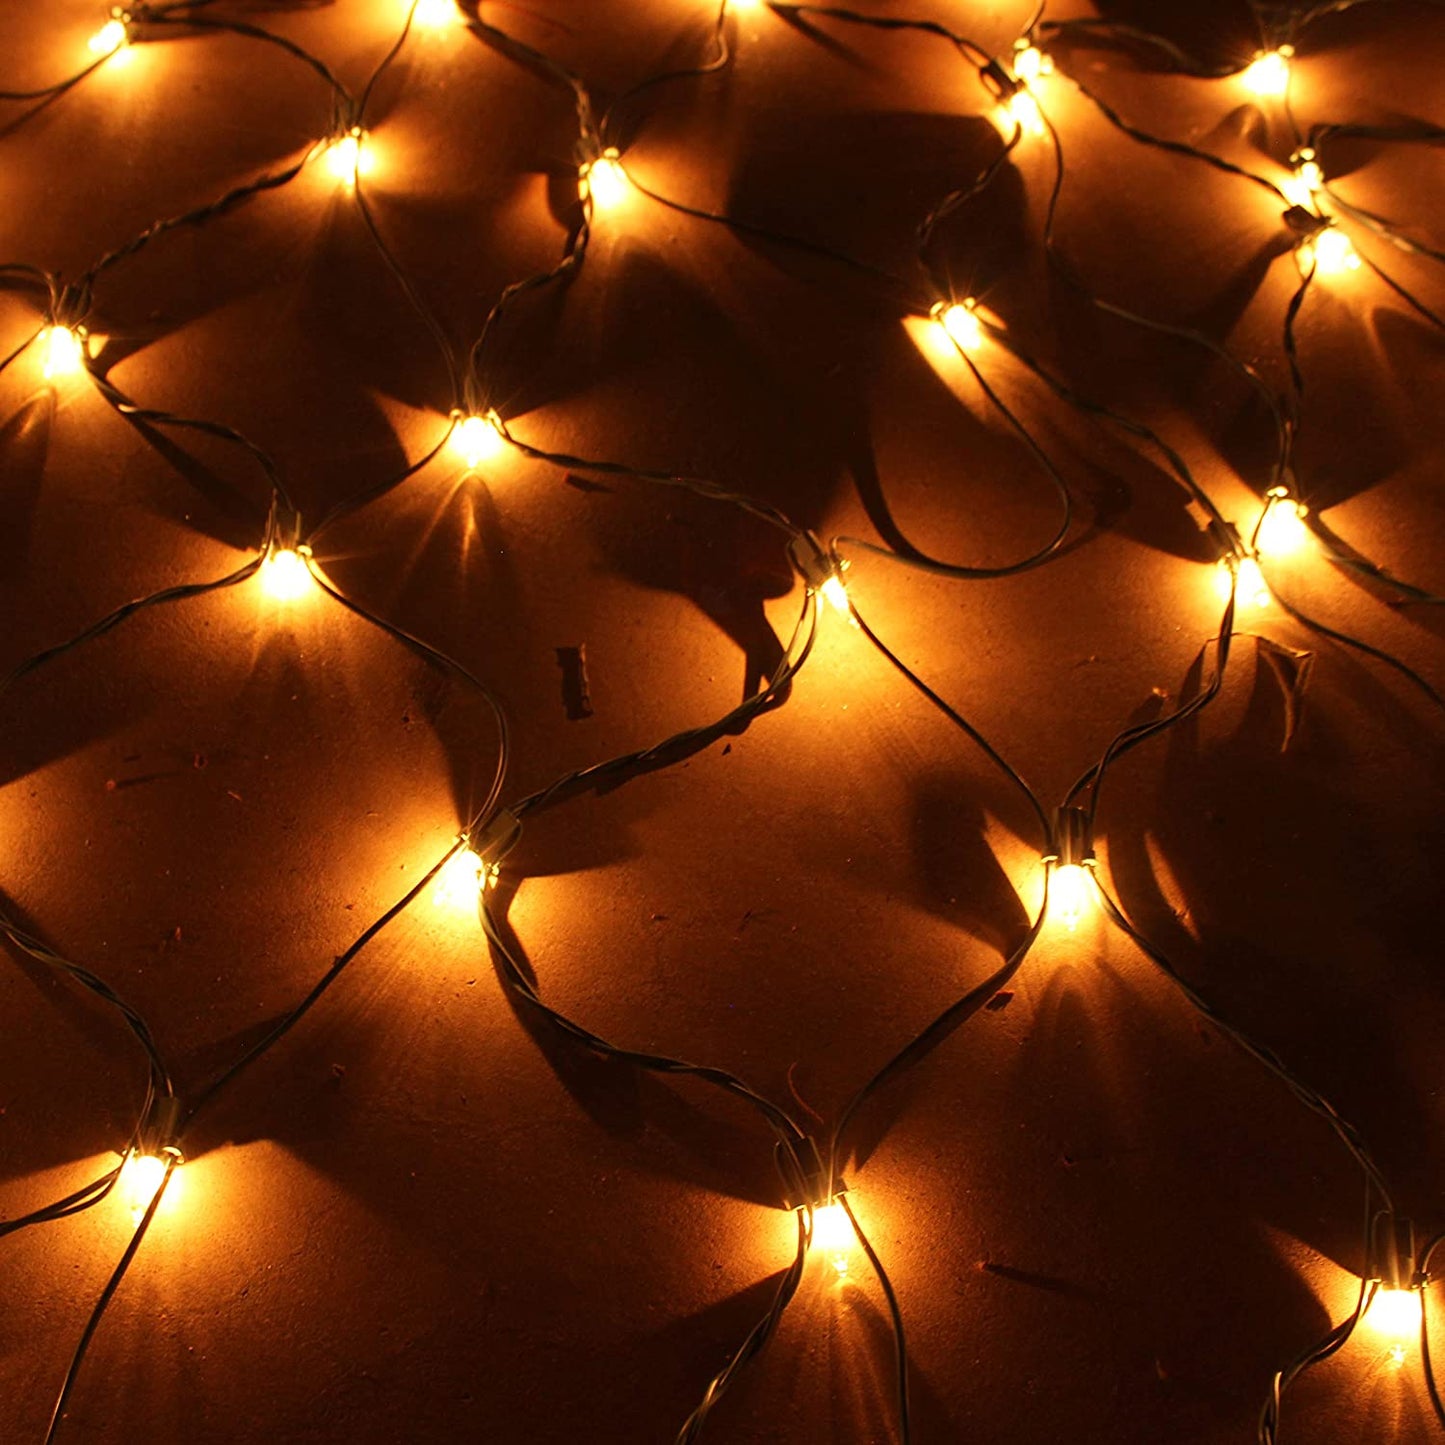 150 Incandescent Christmas Lights Net Lights, Warm White